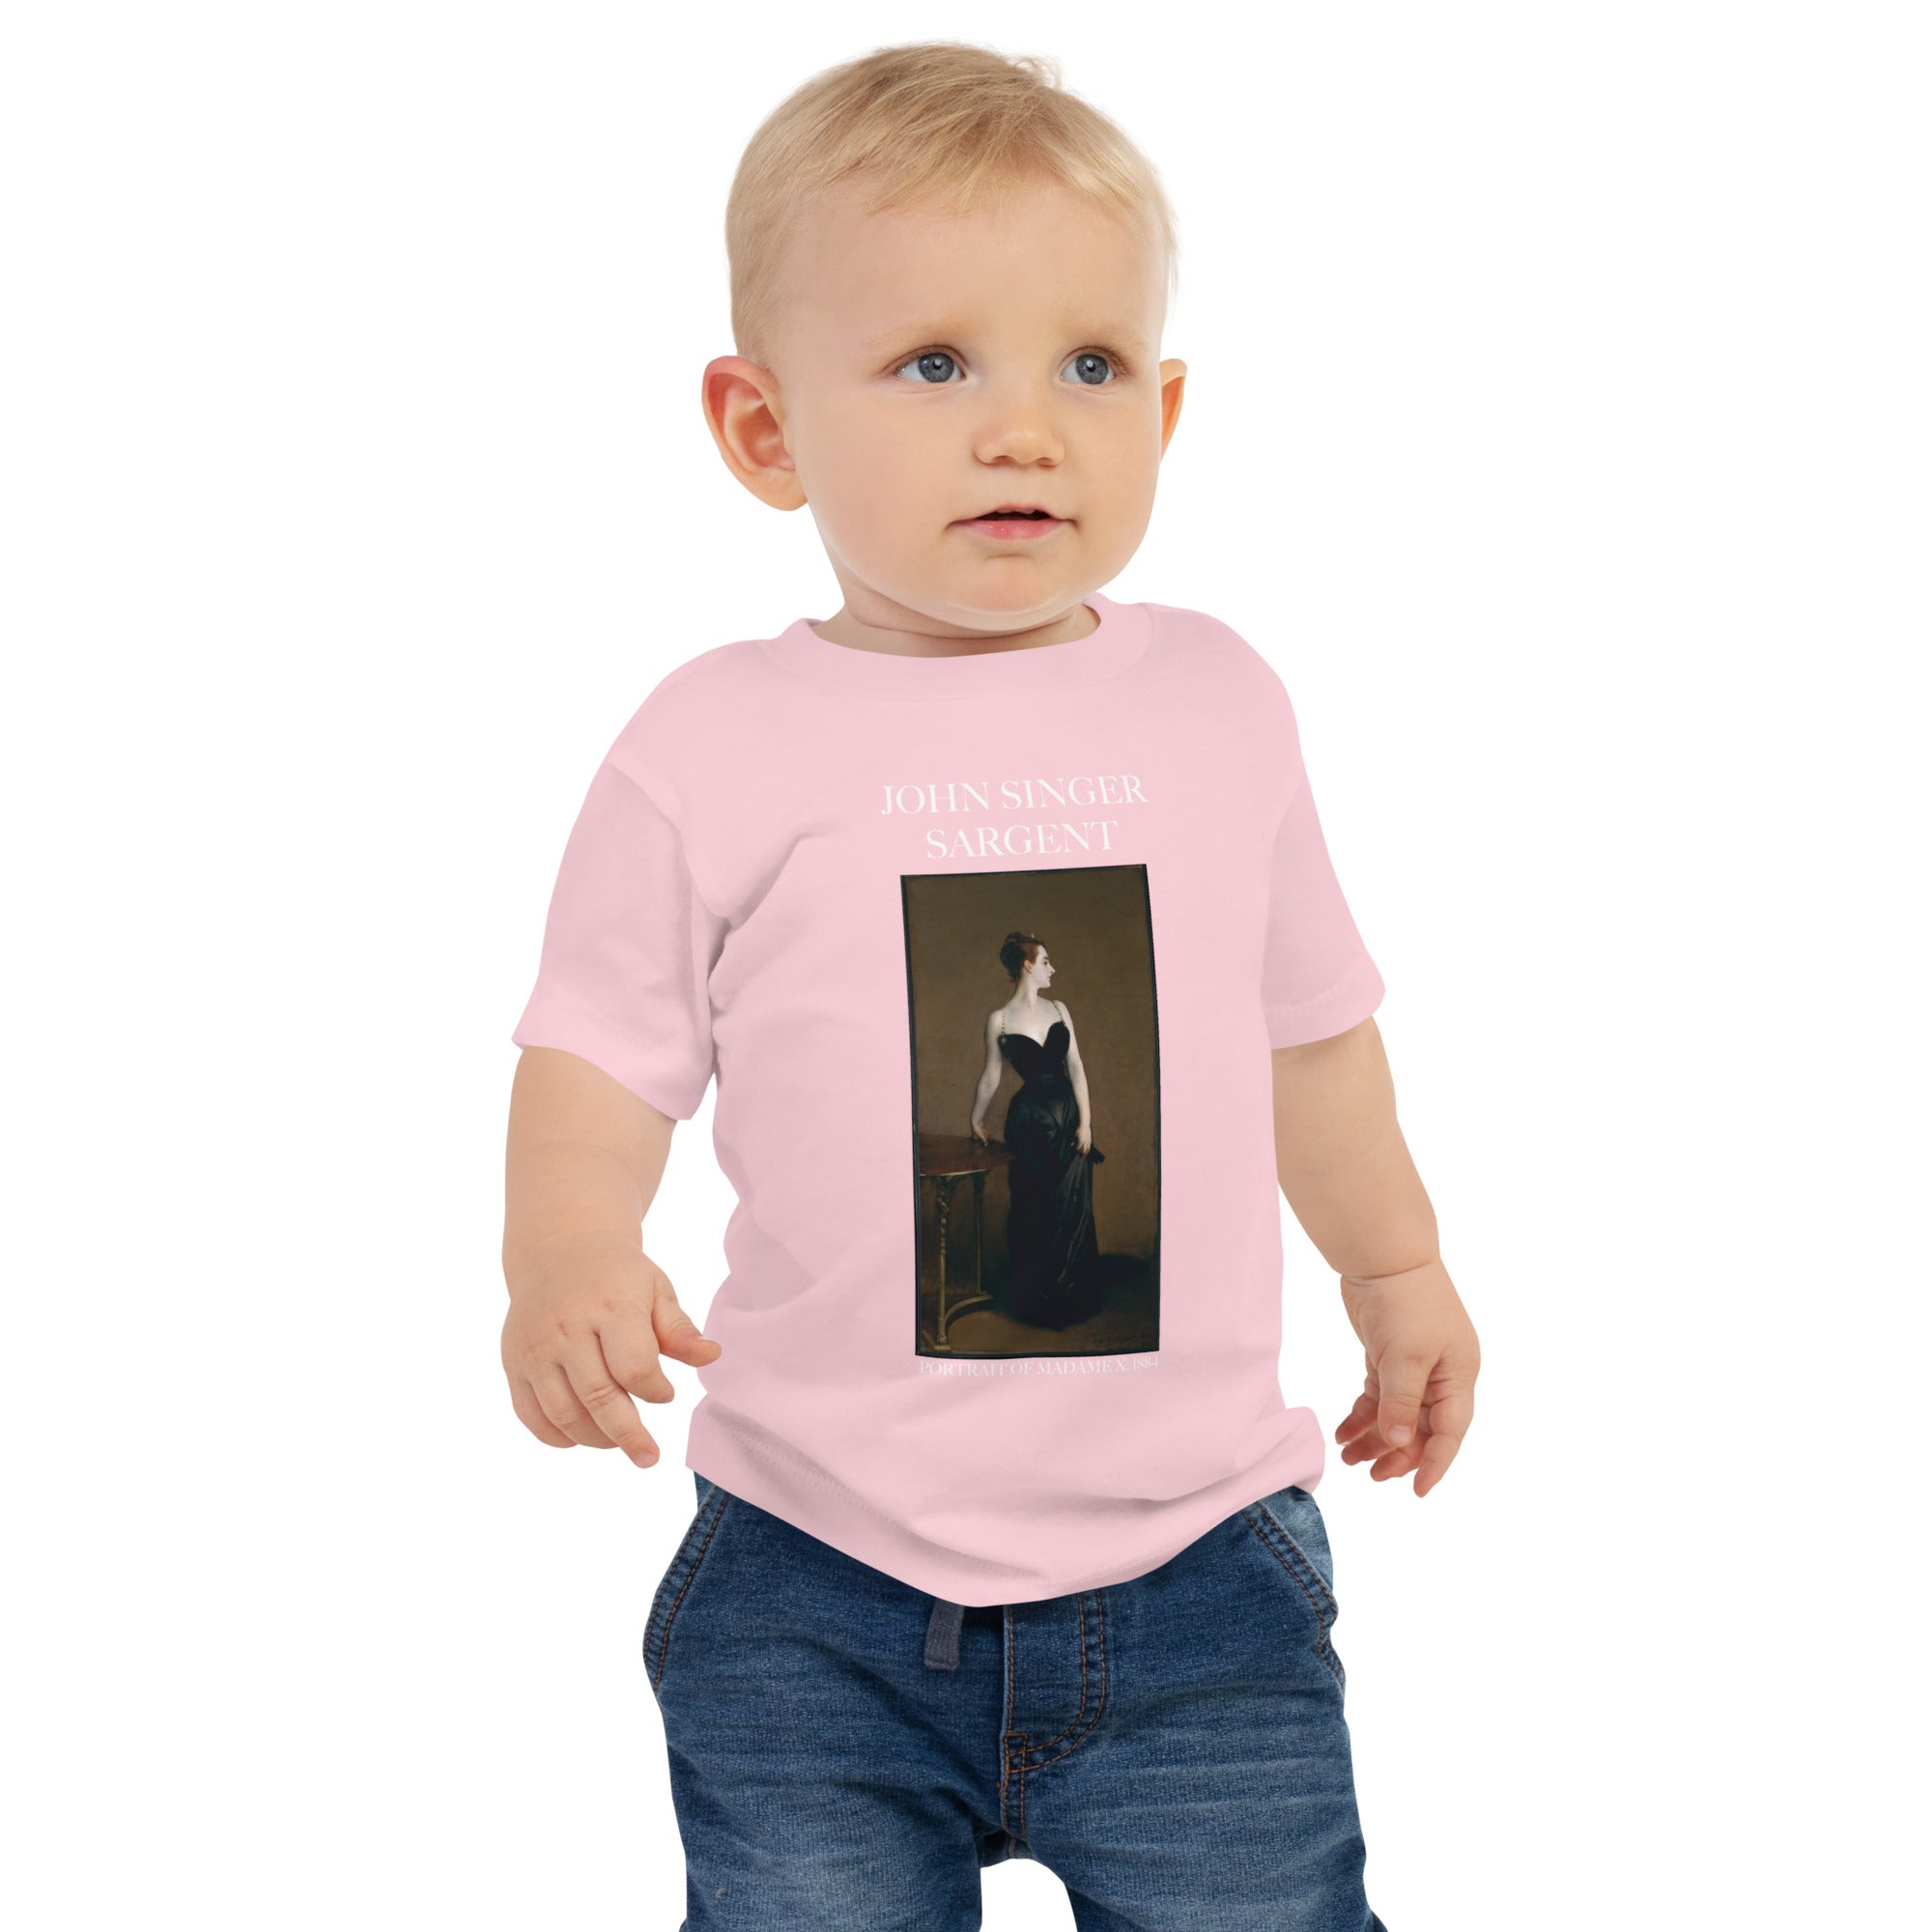 John Singer Sargent 'Portrait of Madame X' Famous Painting Baby Staple T-Shirt | Premium Baby Art Tee